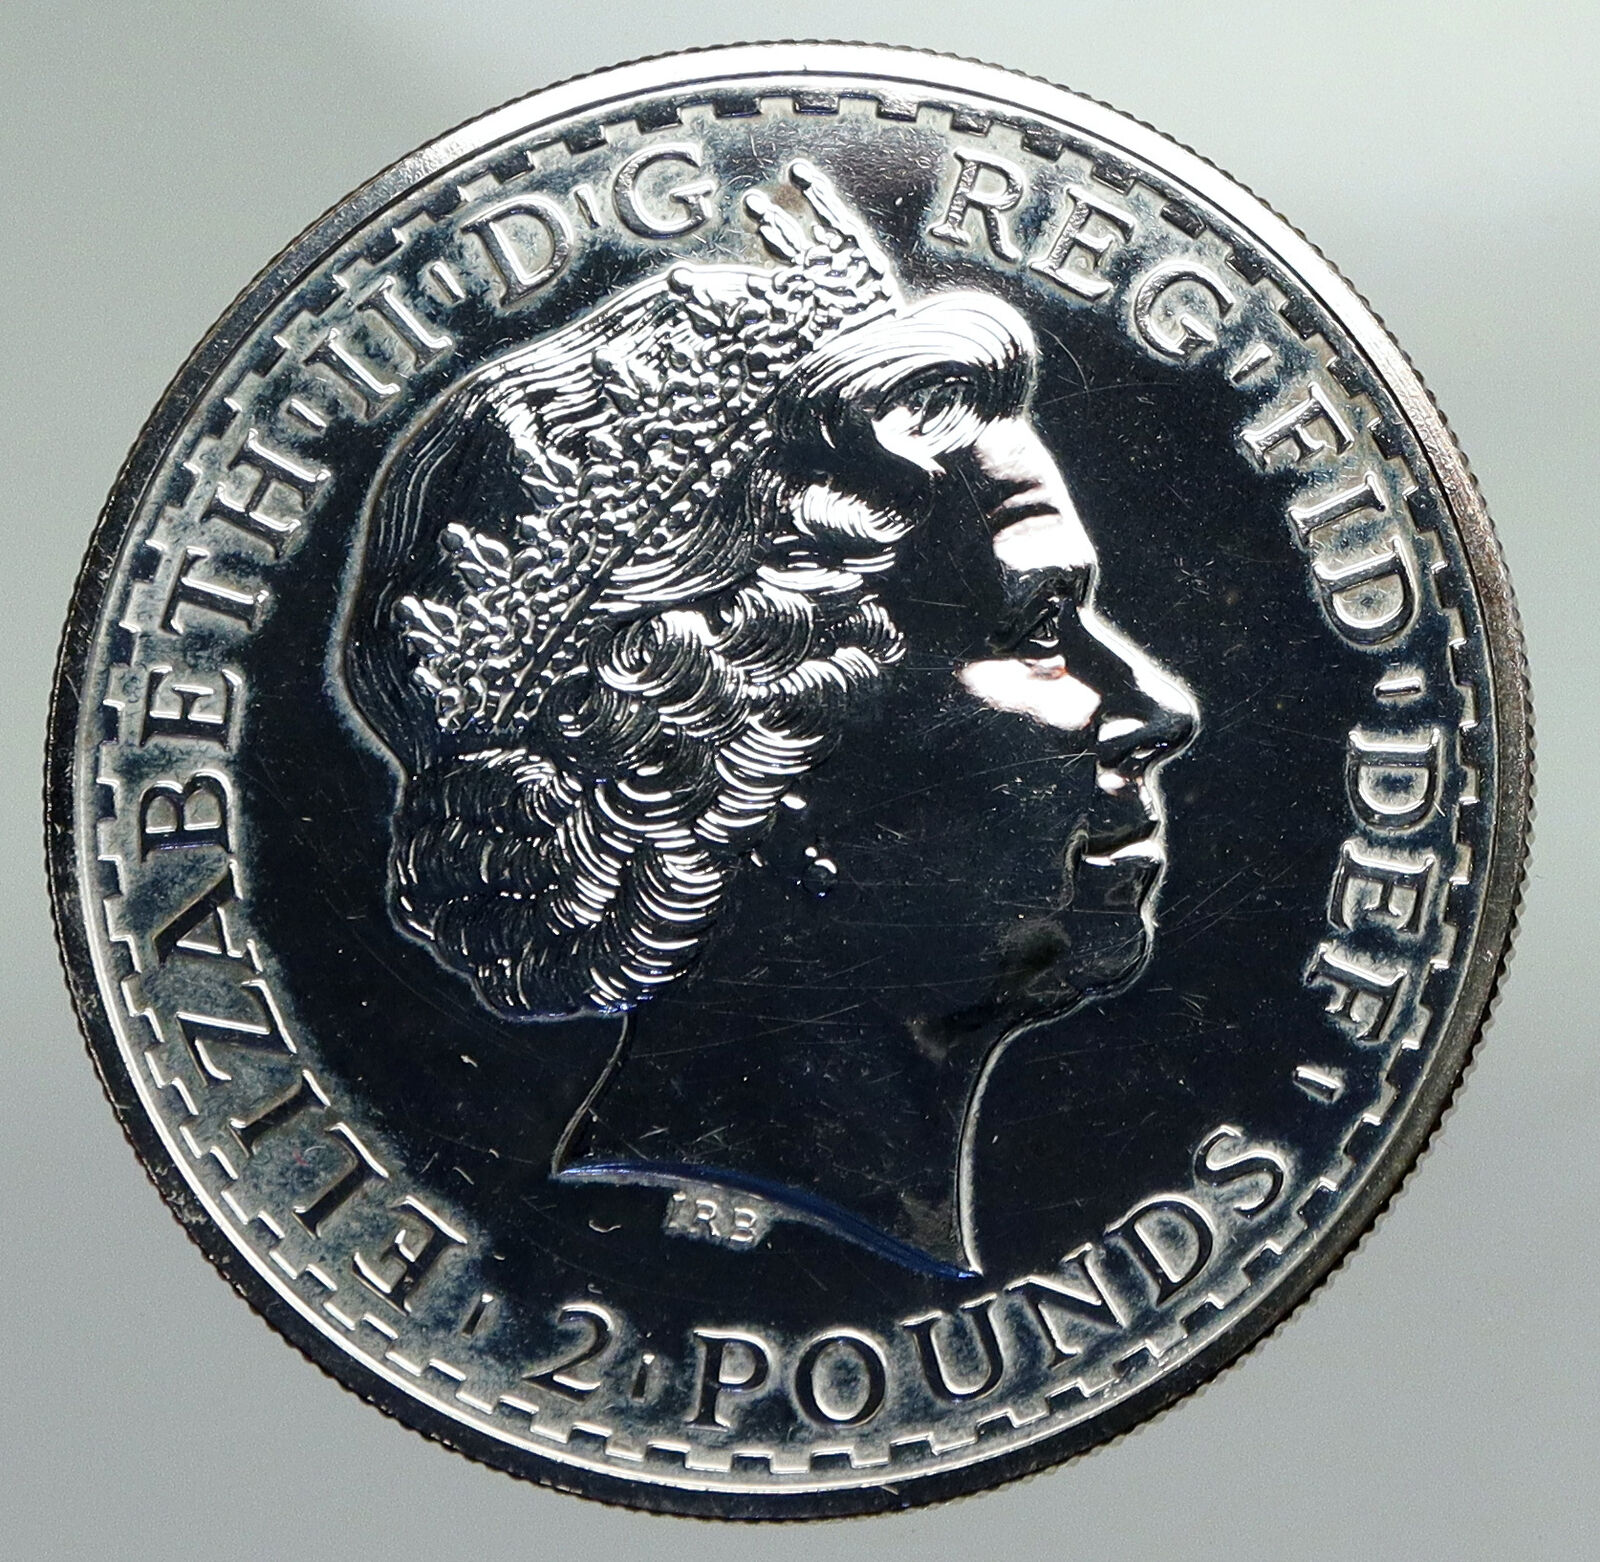 2003 AUSTRALIA UK Queen Elizabeth II BRITANNIA OZ PF Silver 2 Pounds Coin i92354